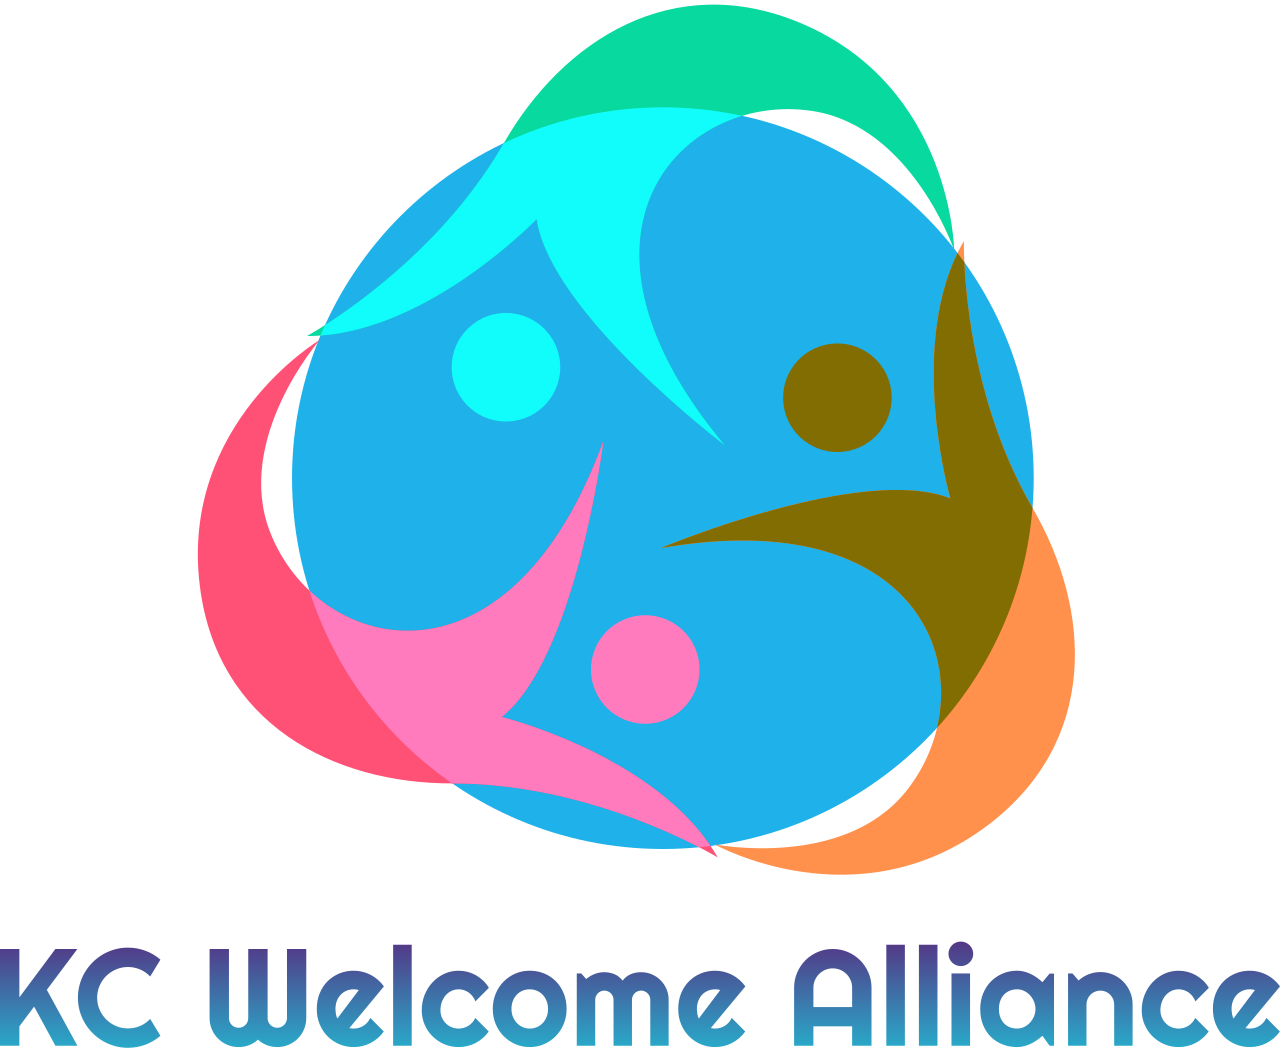 KC Welcome Alliance's logo